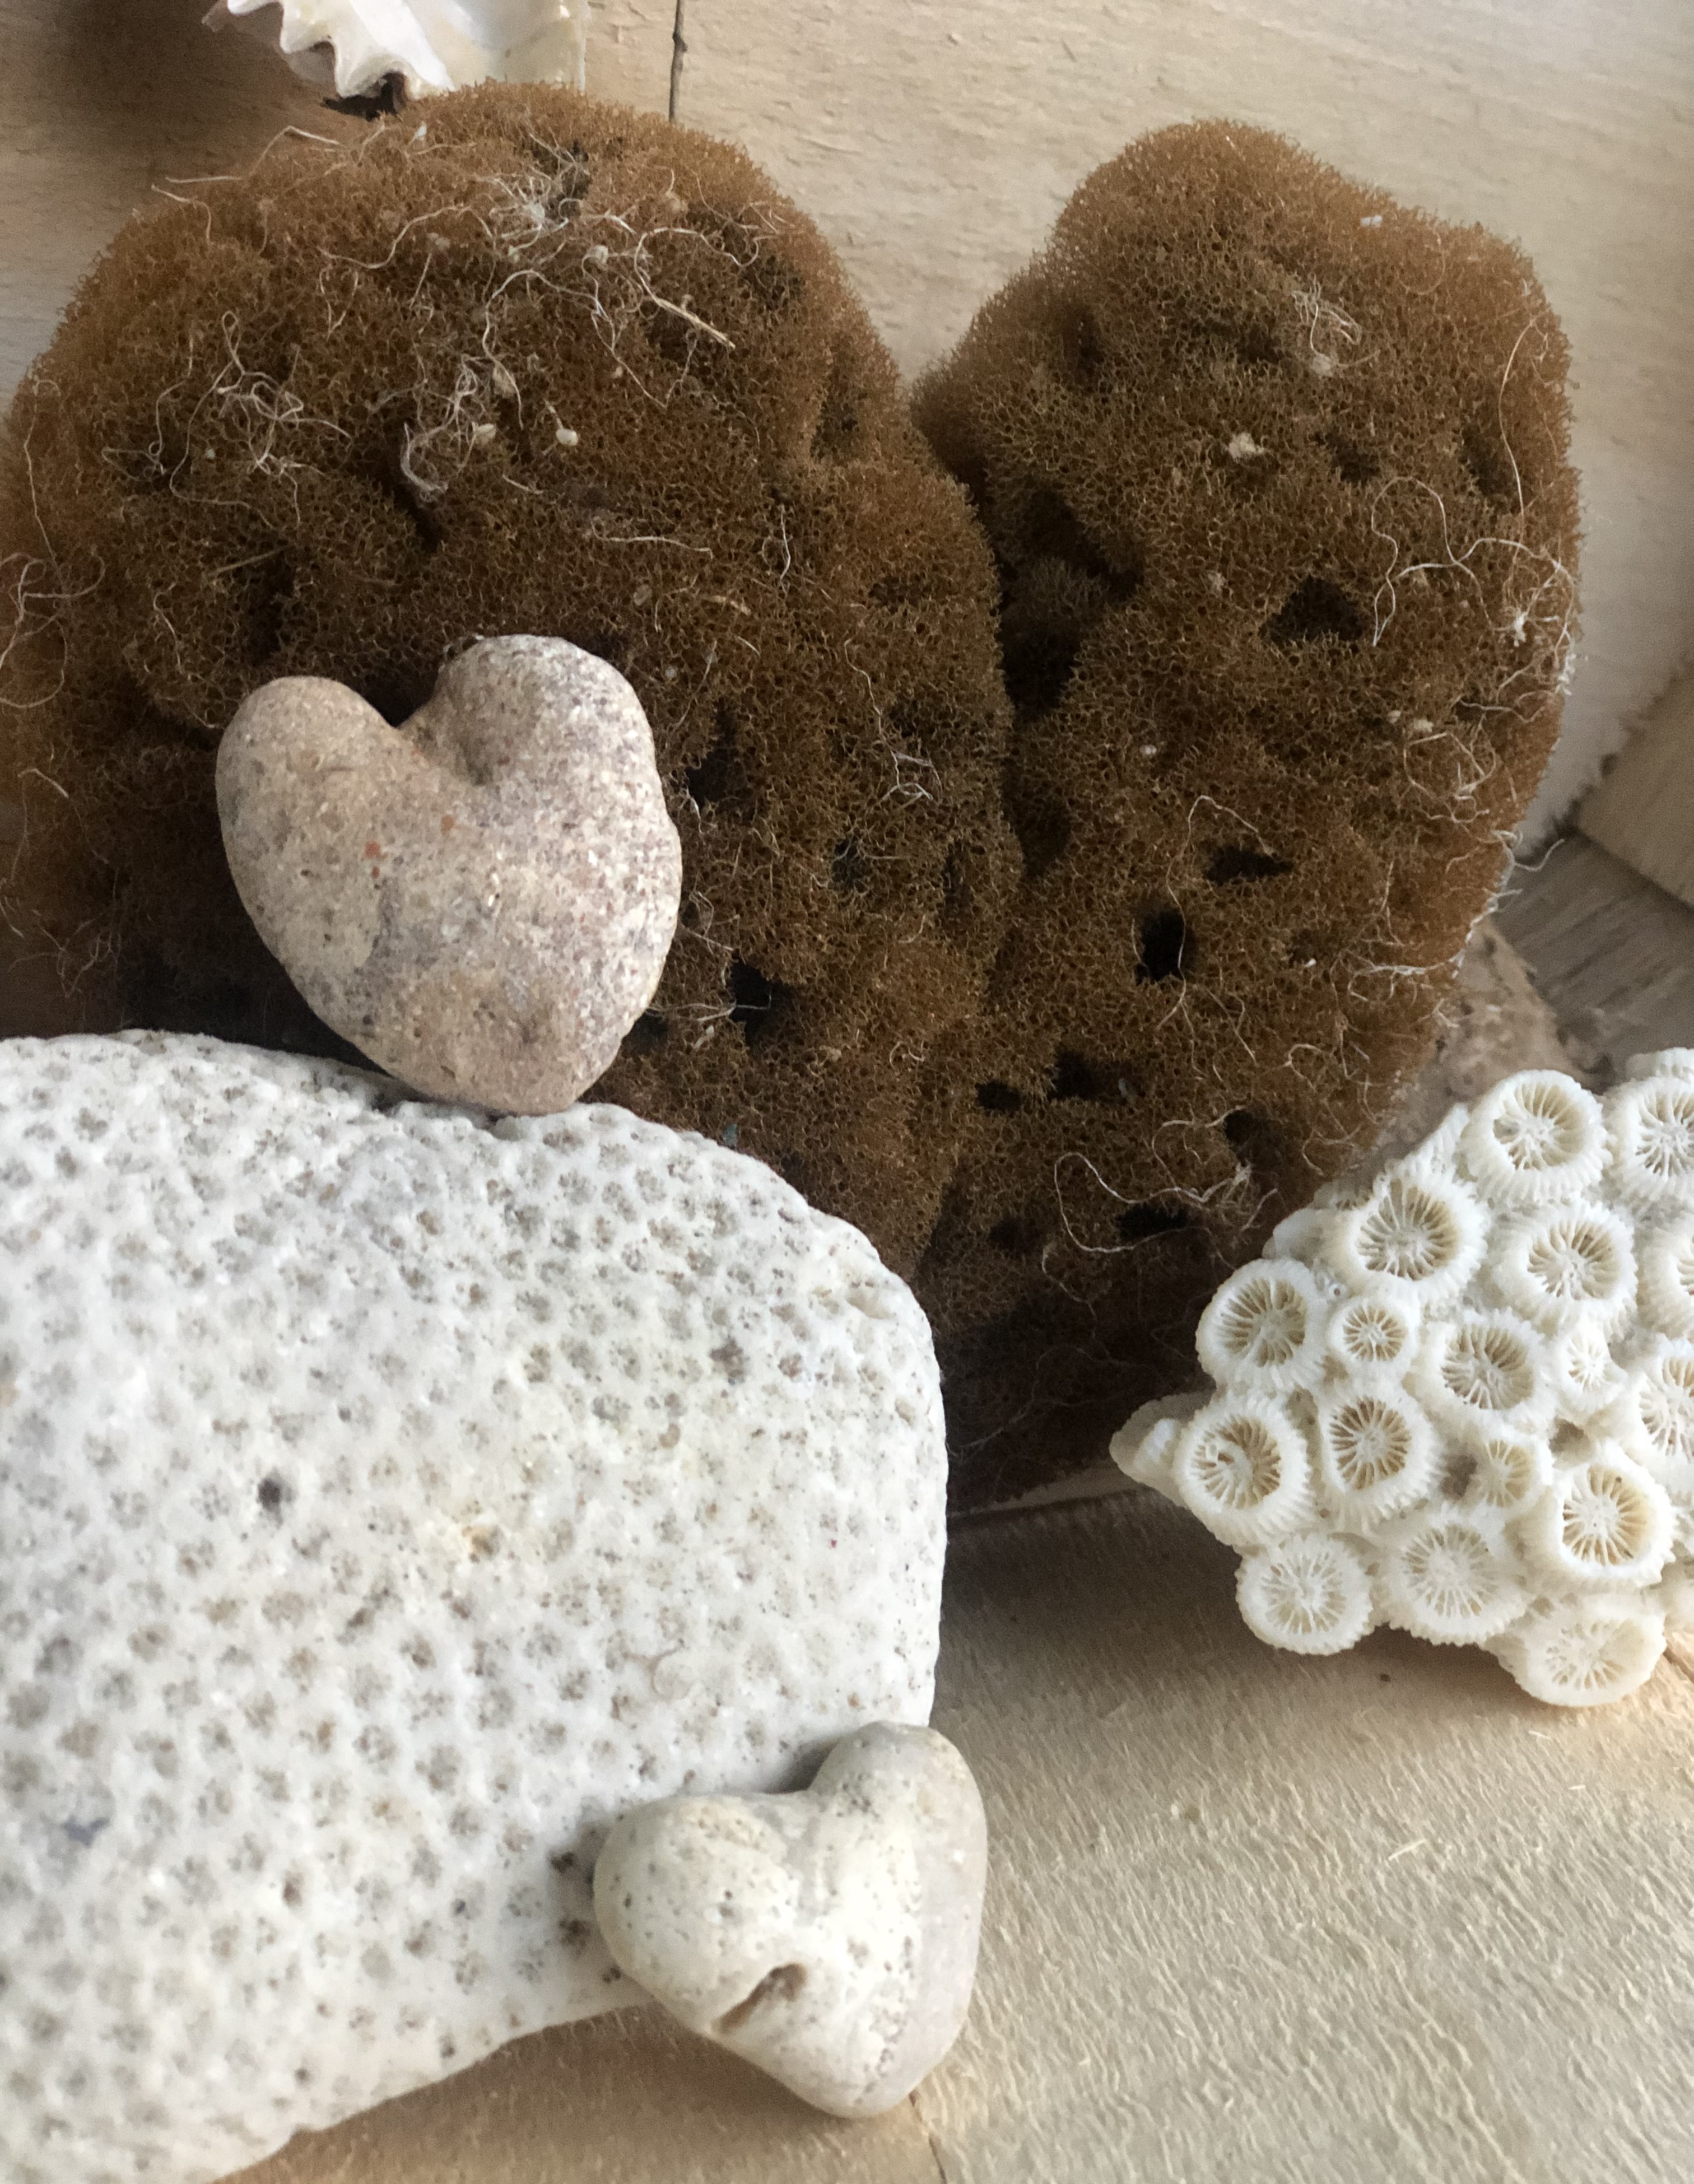 Coral, stone, and sea sponge